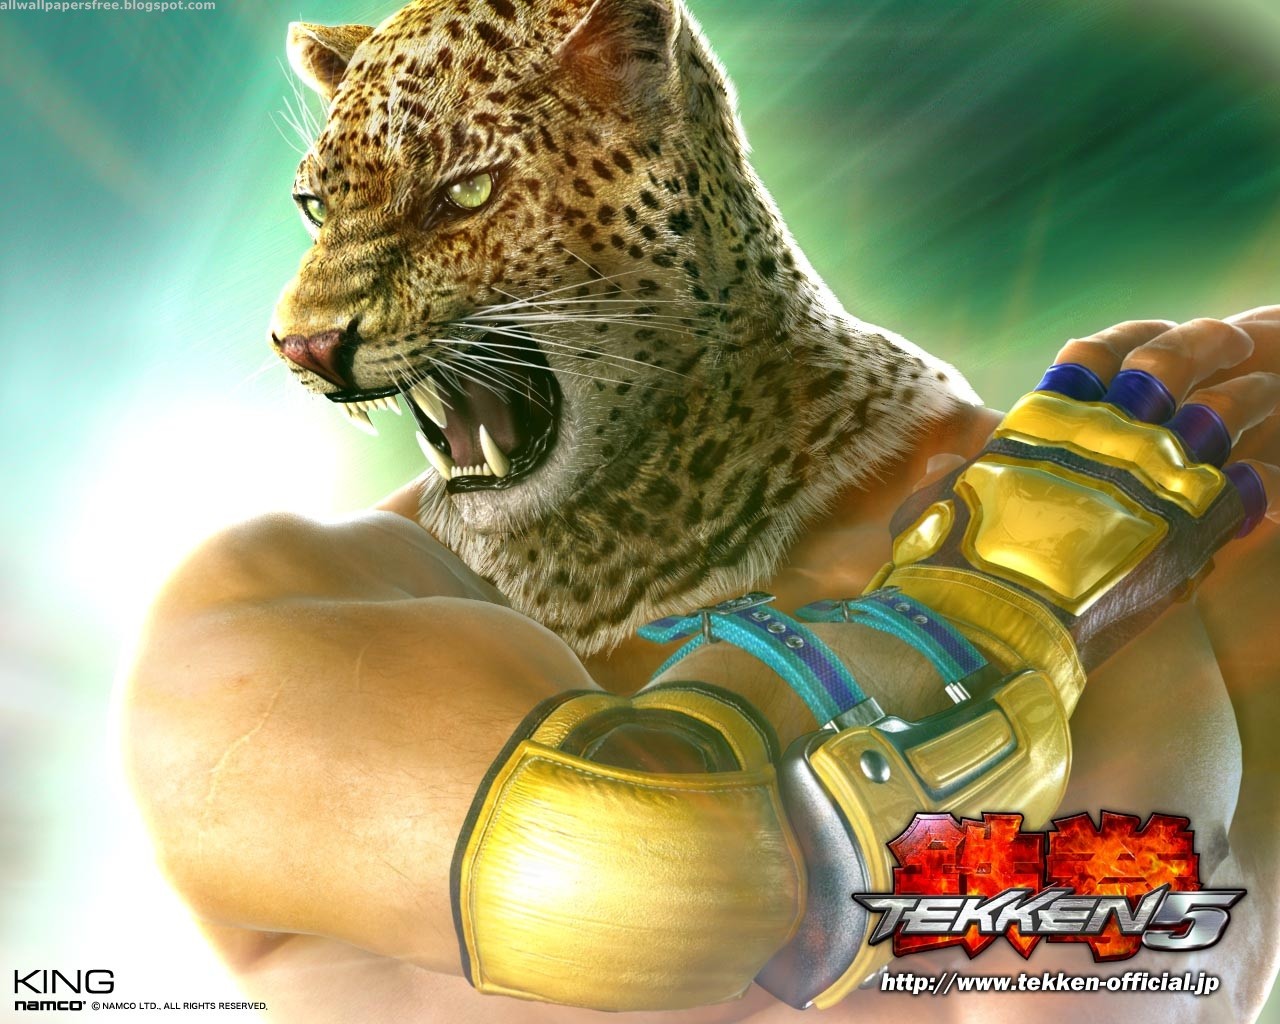 King Tekken Tekken 5 1280x1024